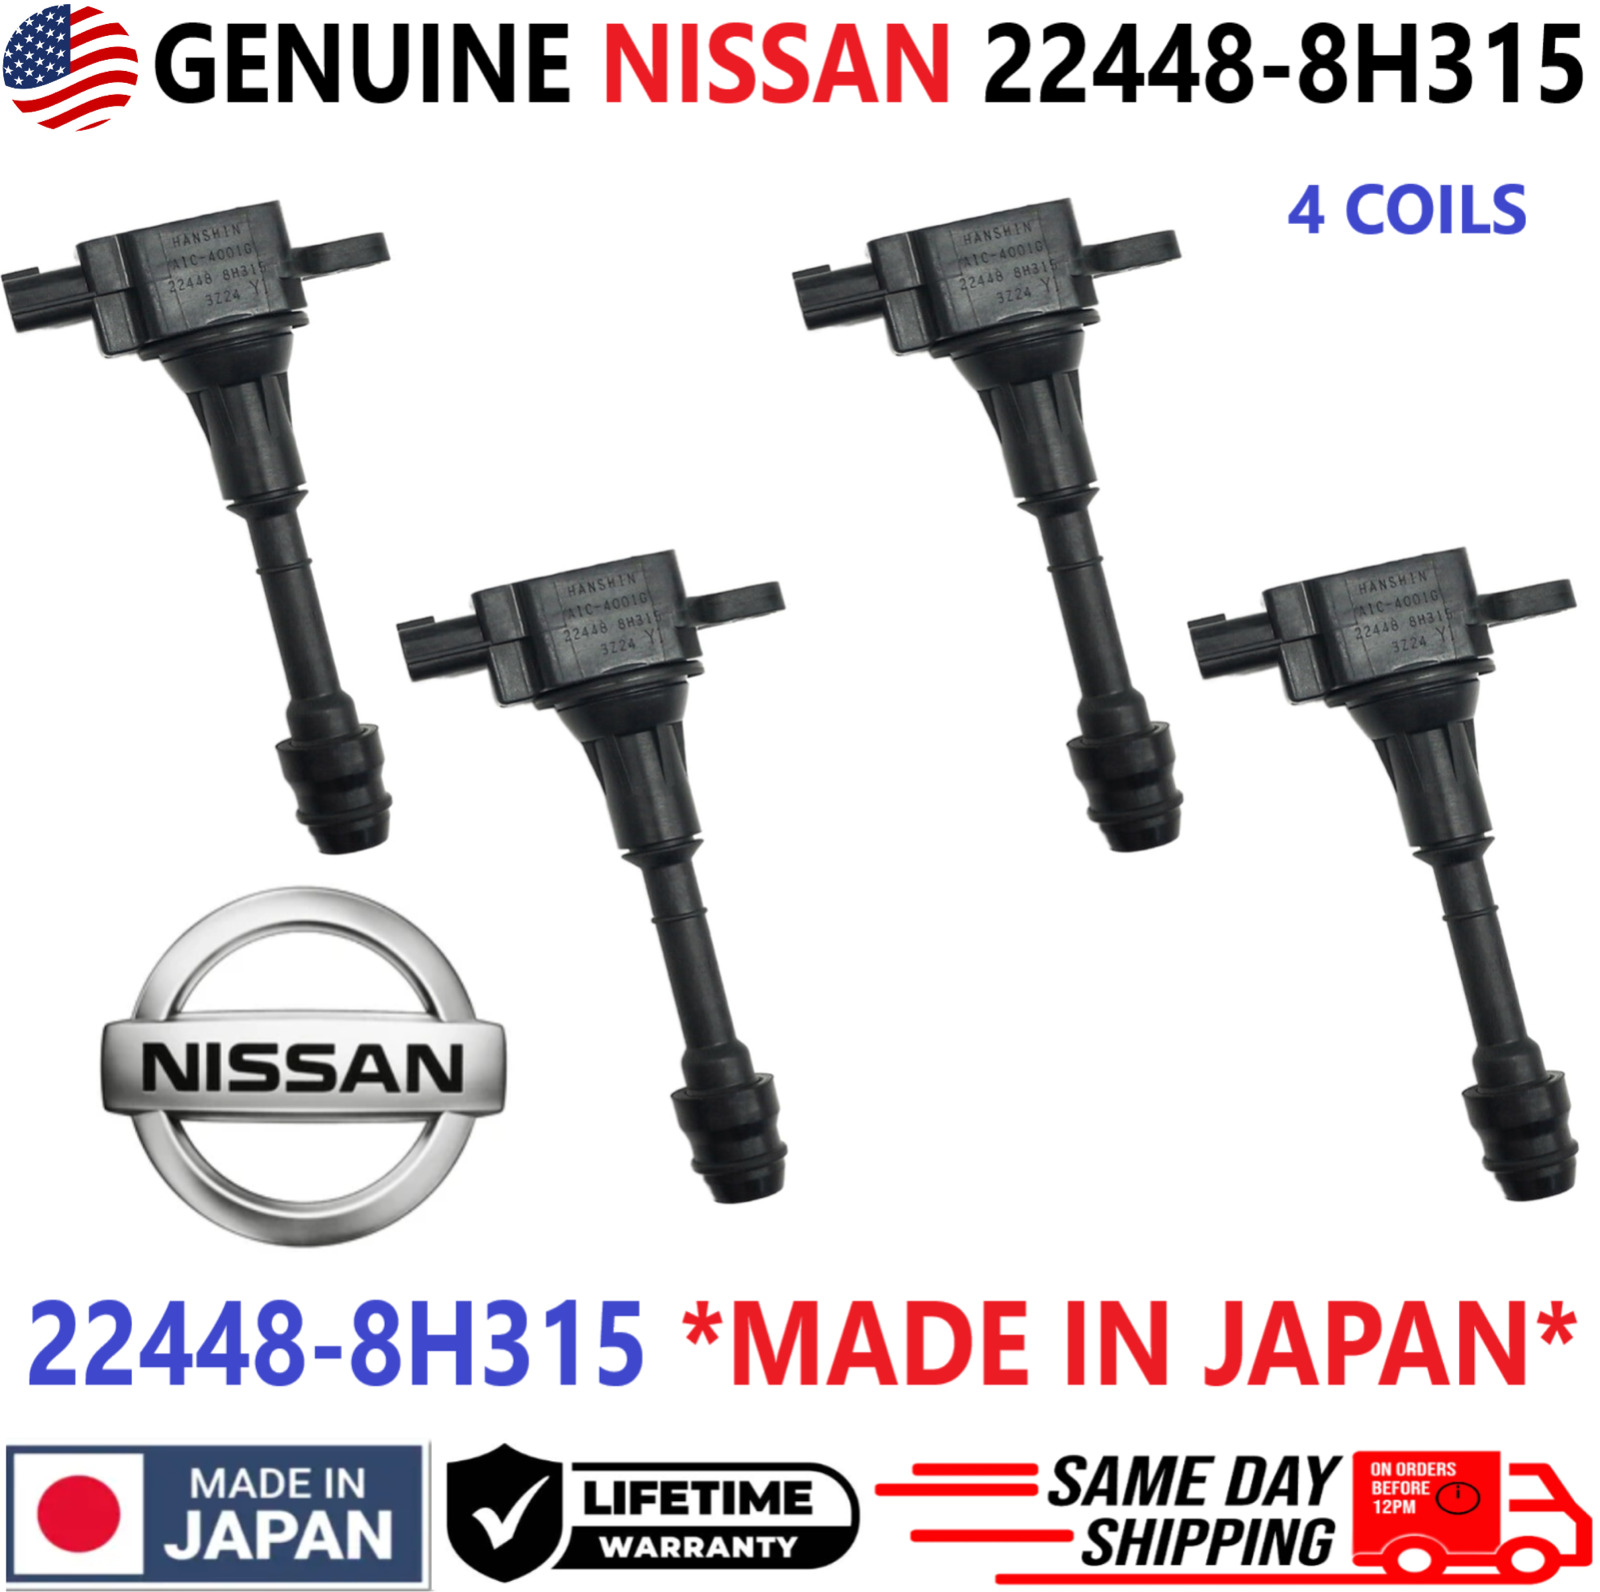 GENUINE Nissan Ignition Coils For 2002-2013 Nissan Altima Sentra X-Trail 2.5L I4